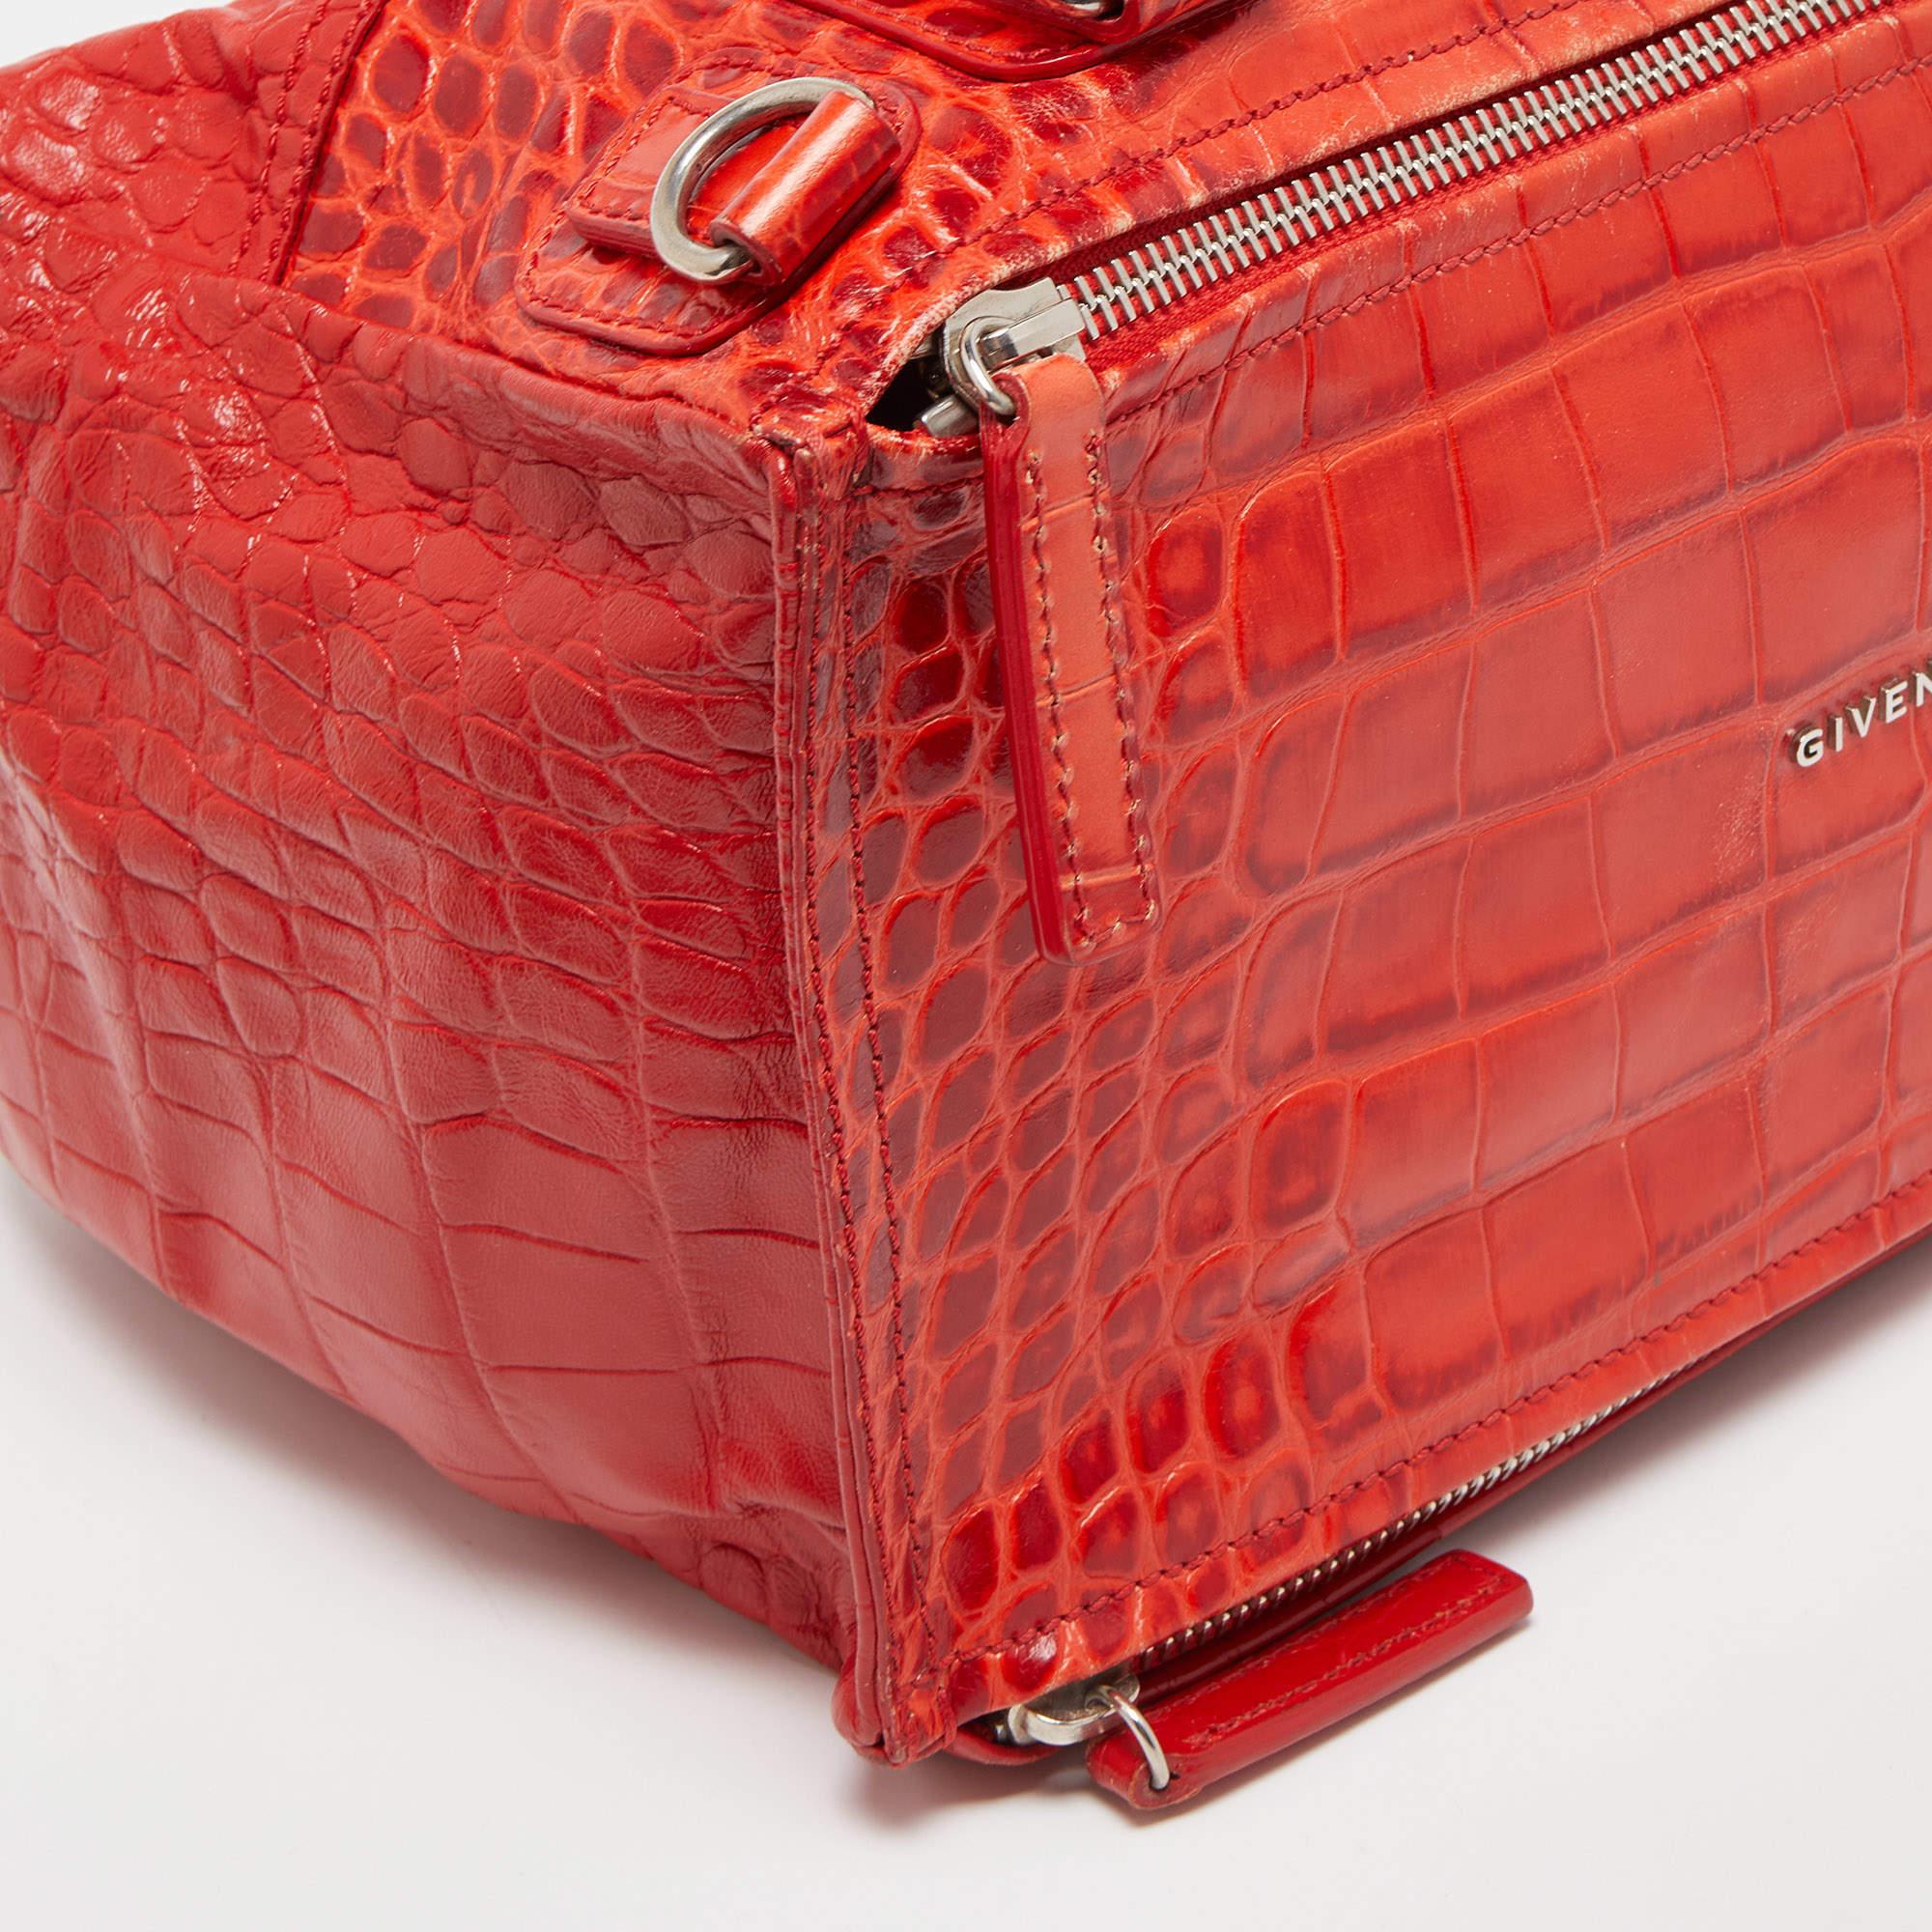 Givenchy Two Tone Red Croc Embossed Leather Medium Pandora Shoulder Bag 5